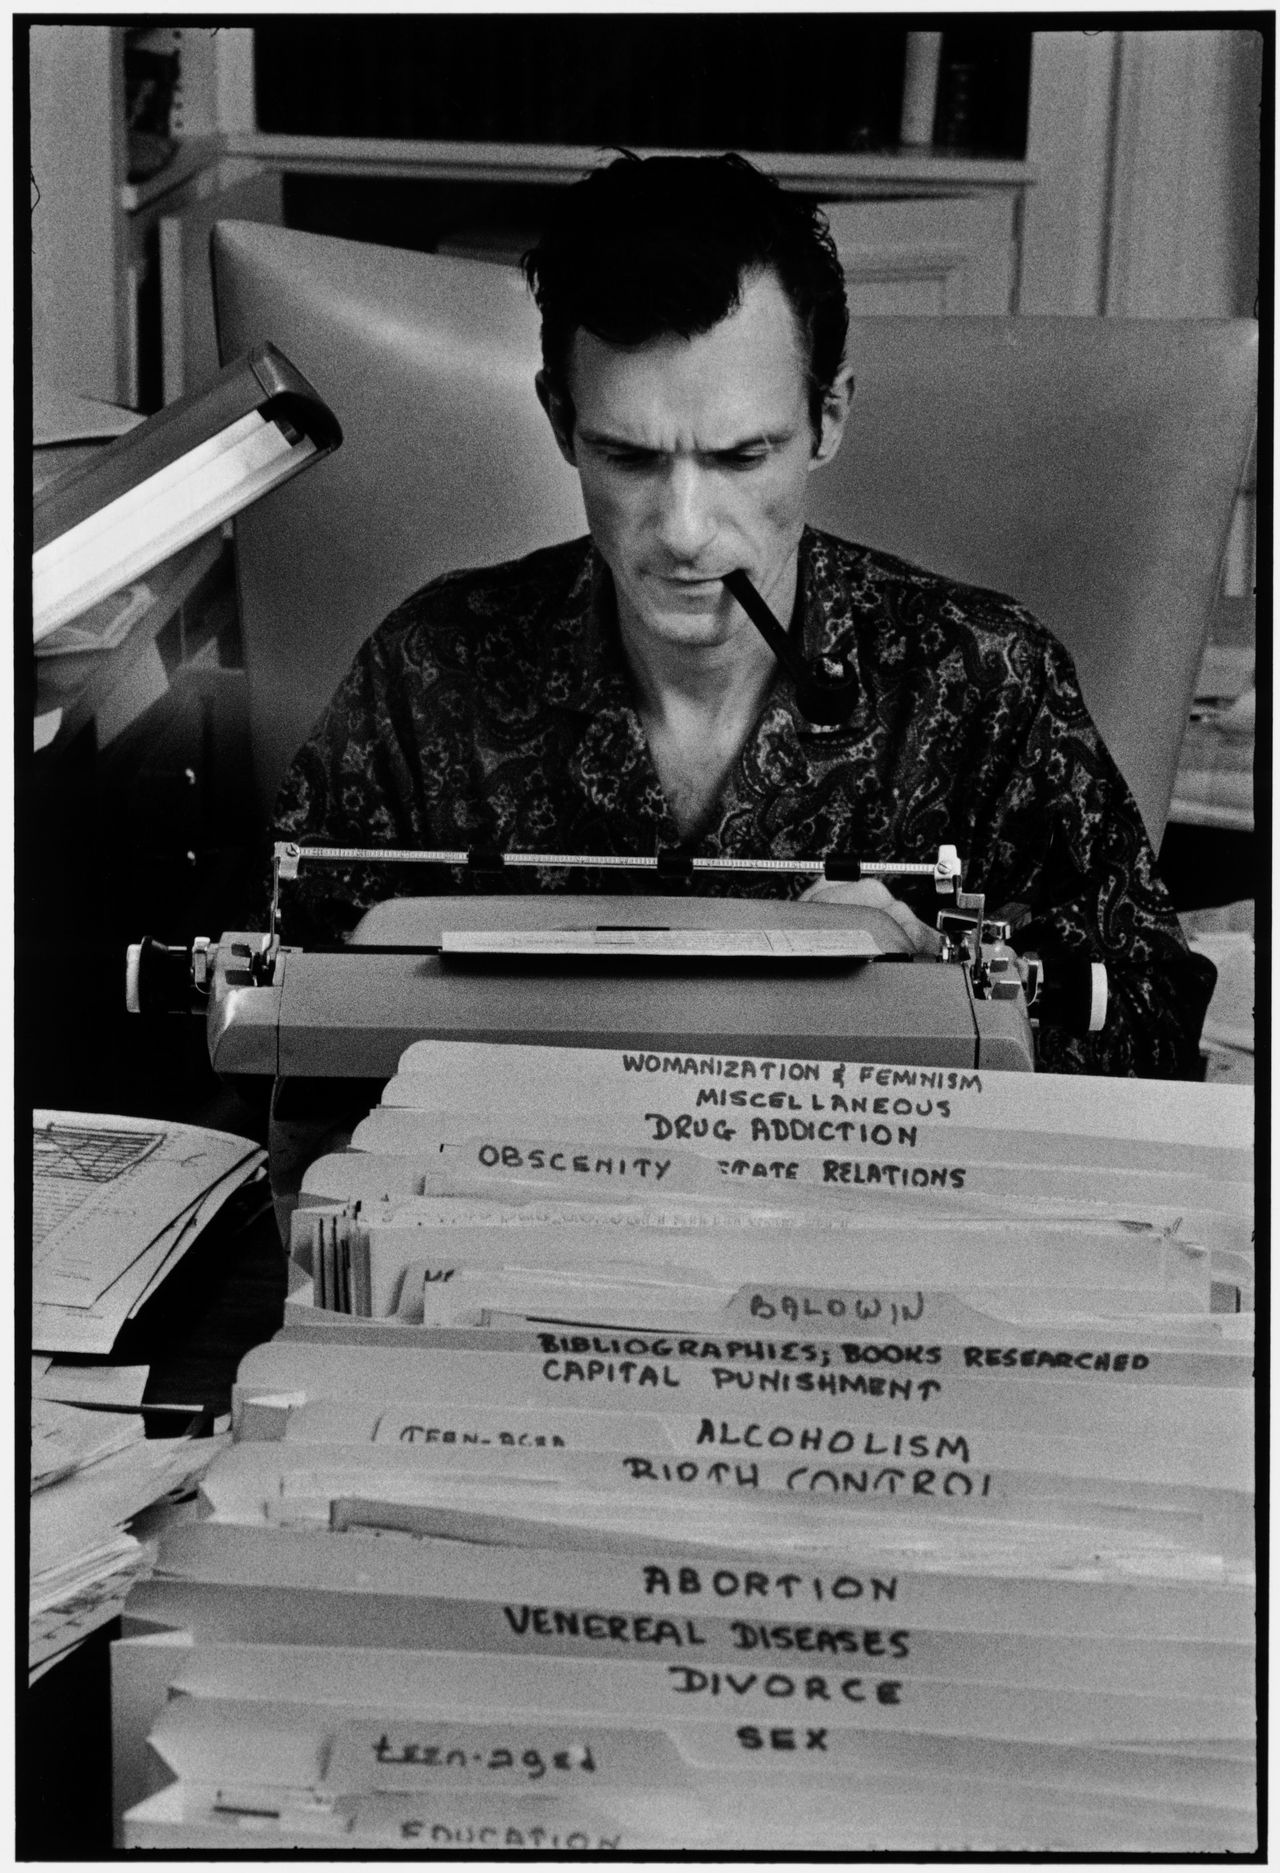 Burt Glinn, "Playboy founder Hugh Hefner typing at his desk in his mansion," Chicago, IL, USA, 1966